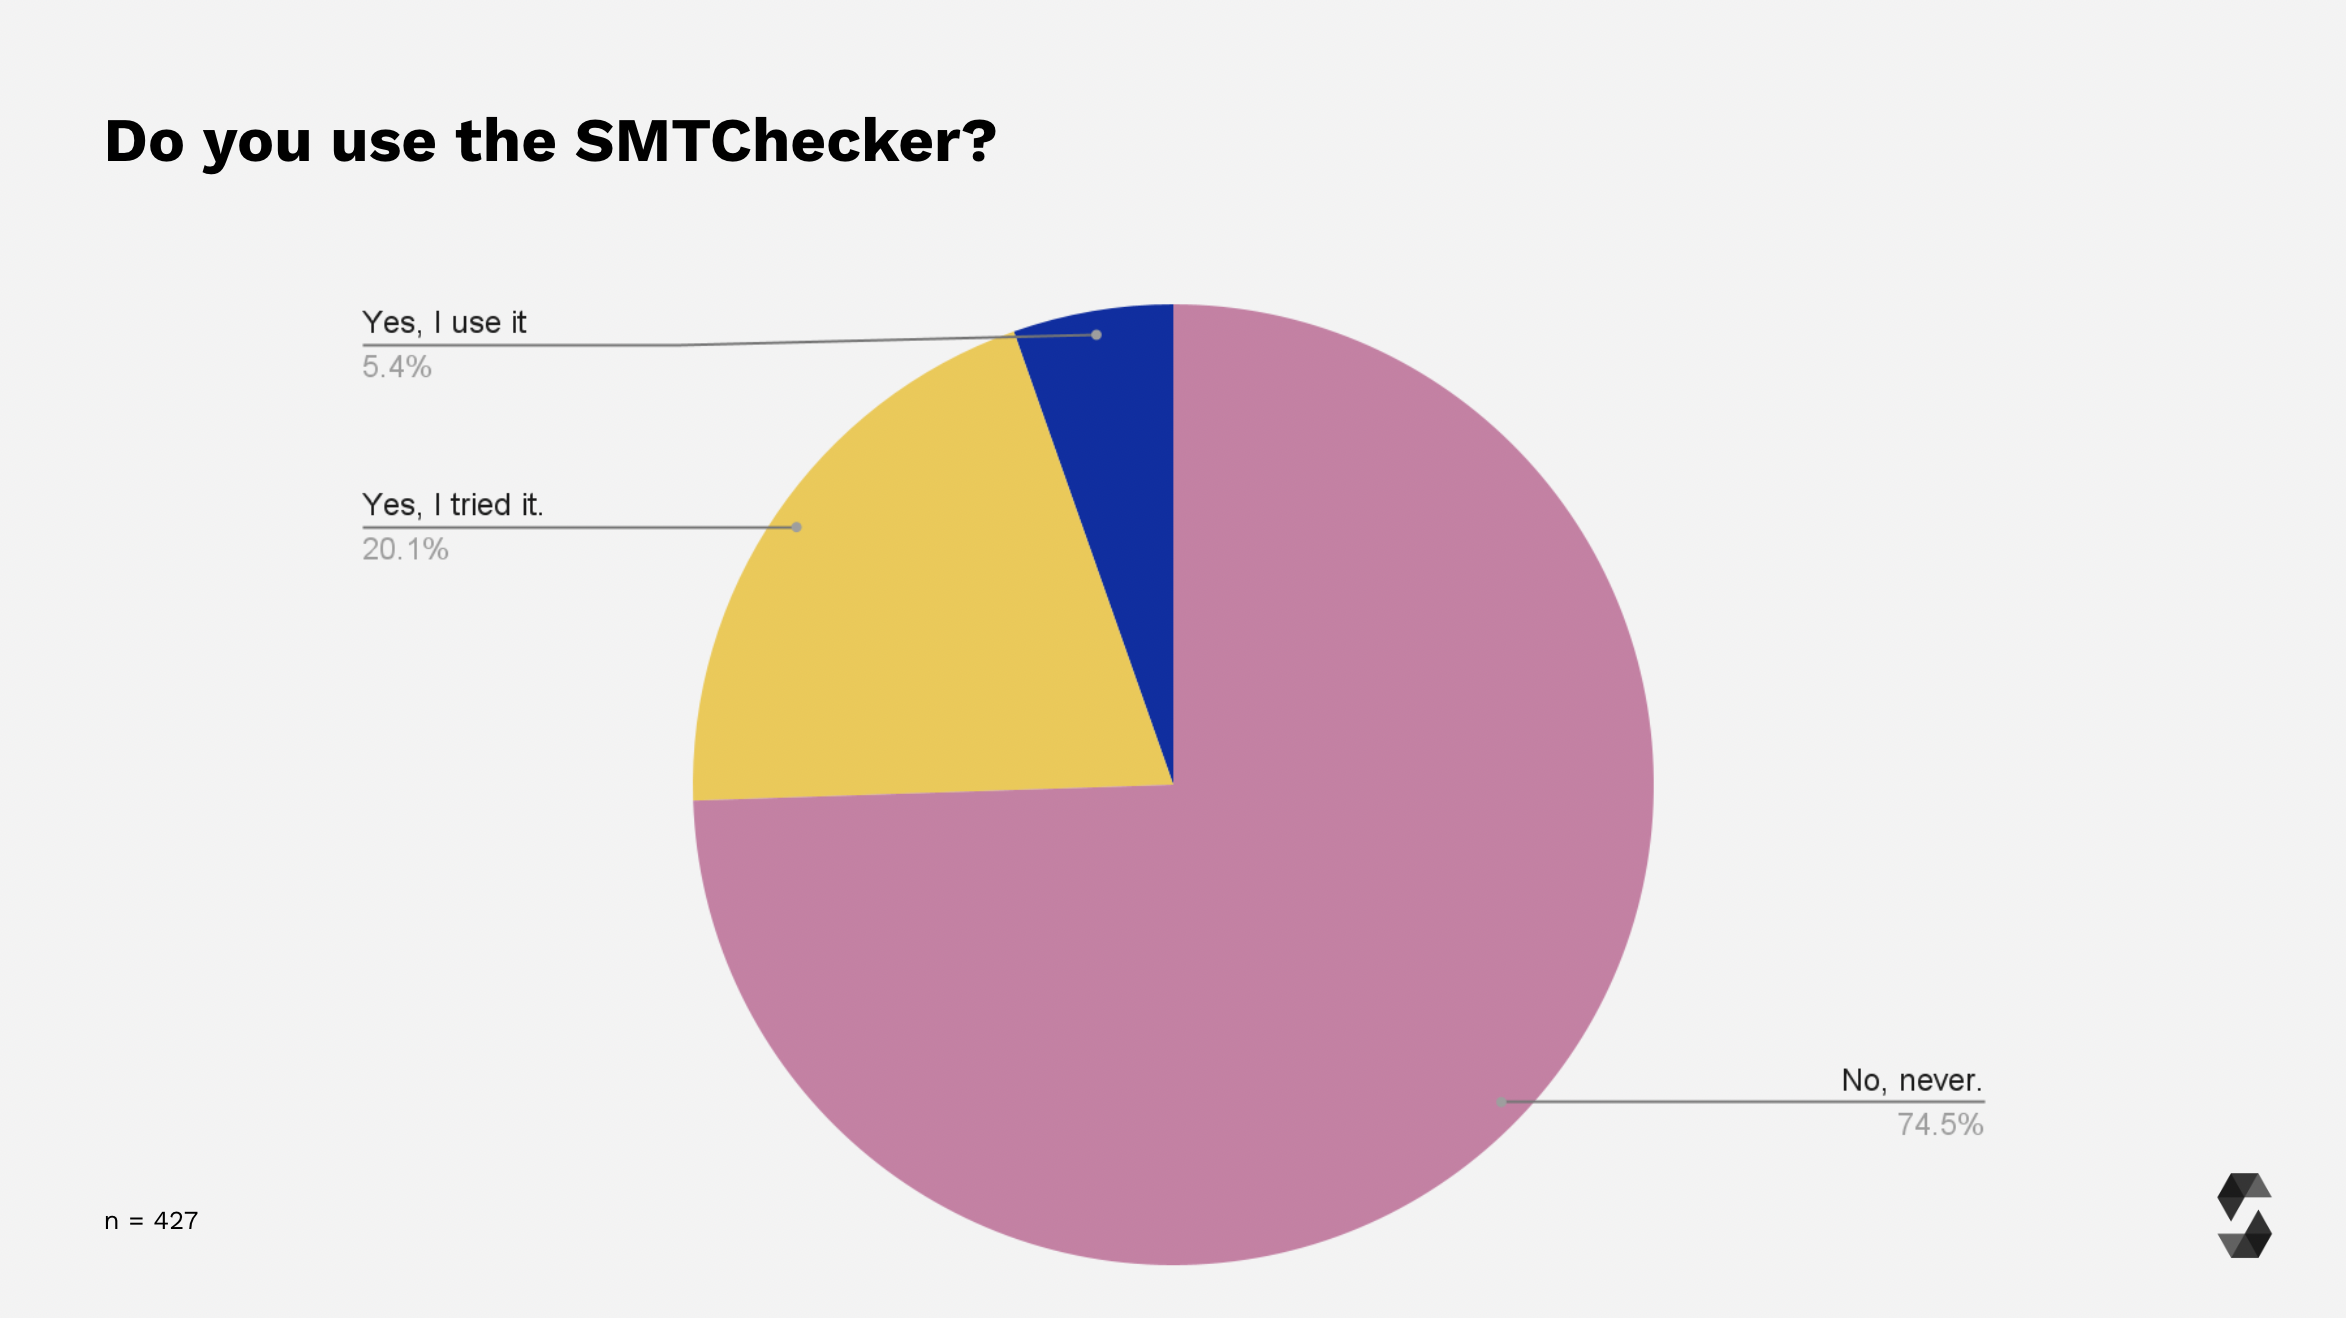 Usage of SMTChecker